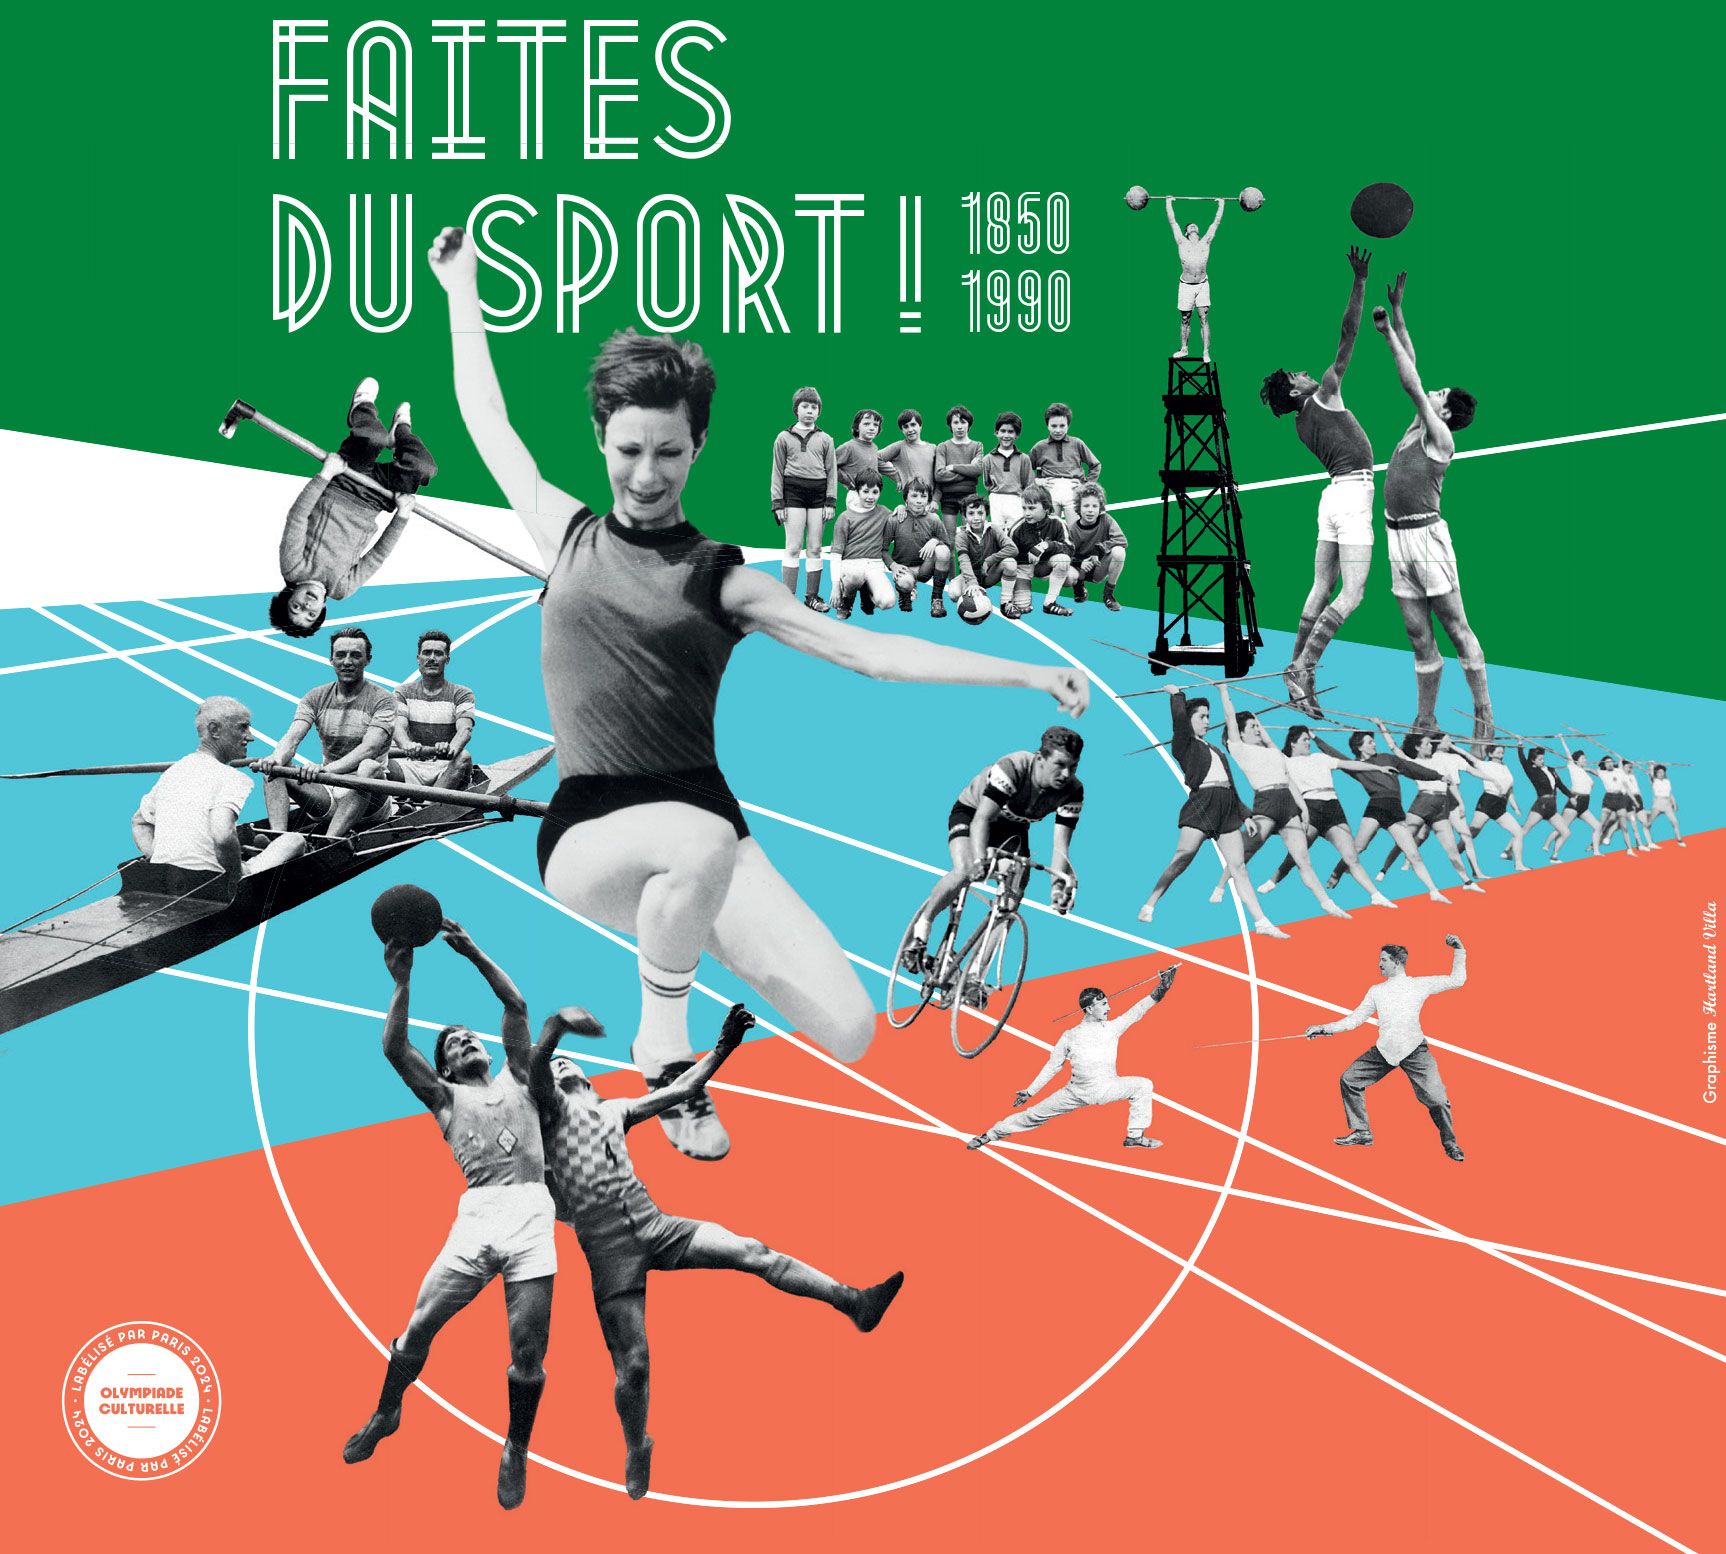 Visuel ‘Faites du sport ! 1850 1990’